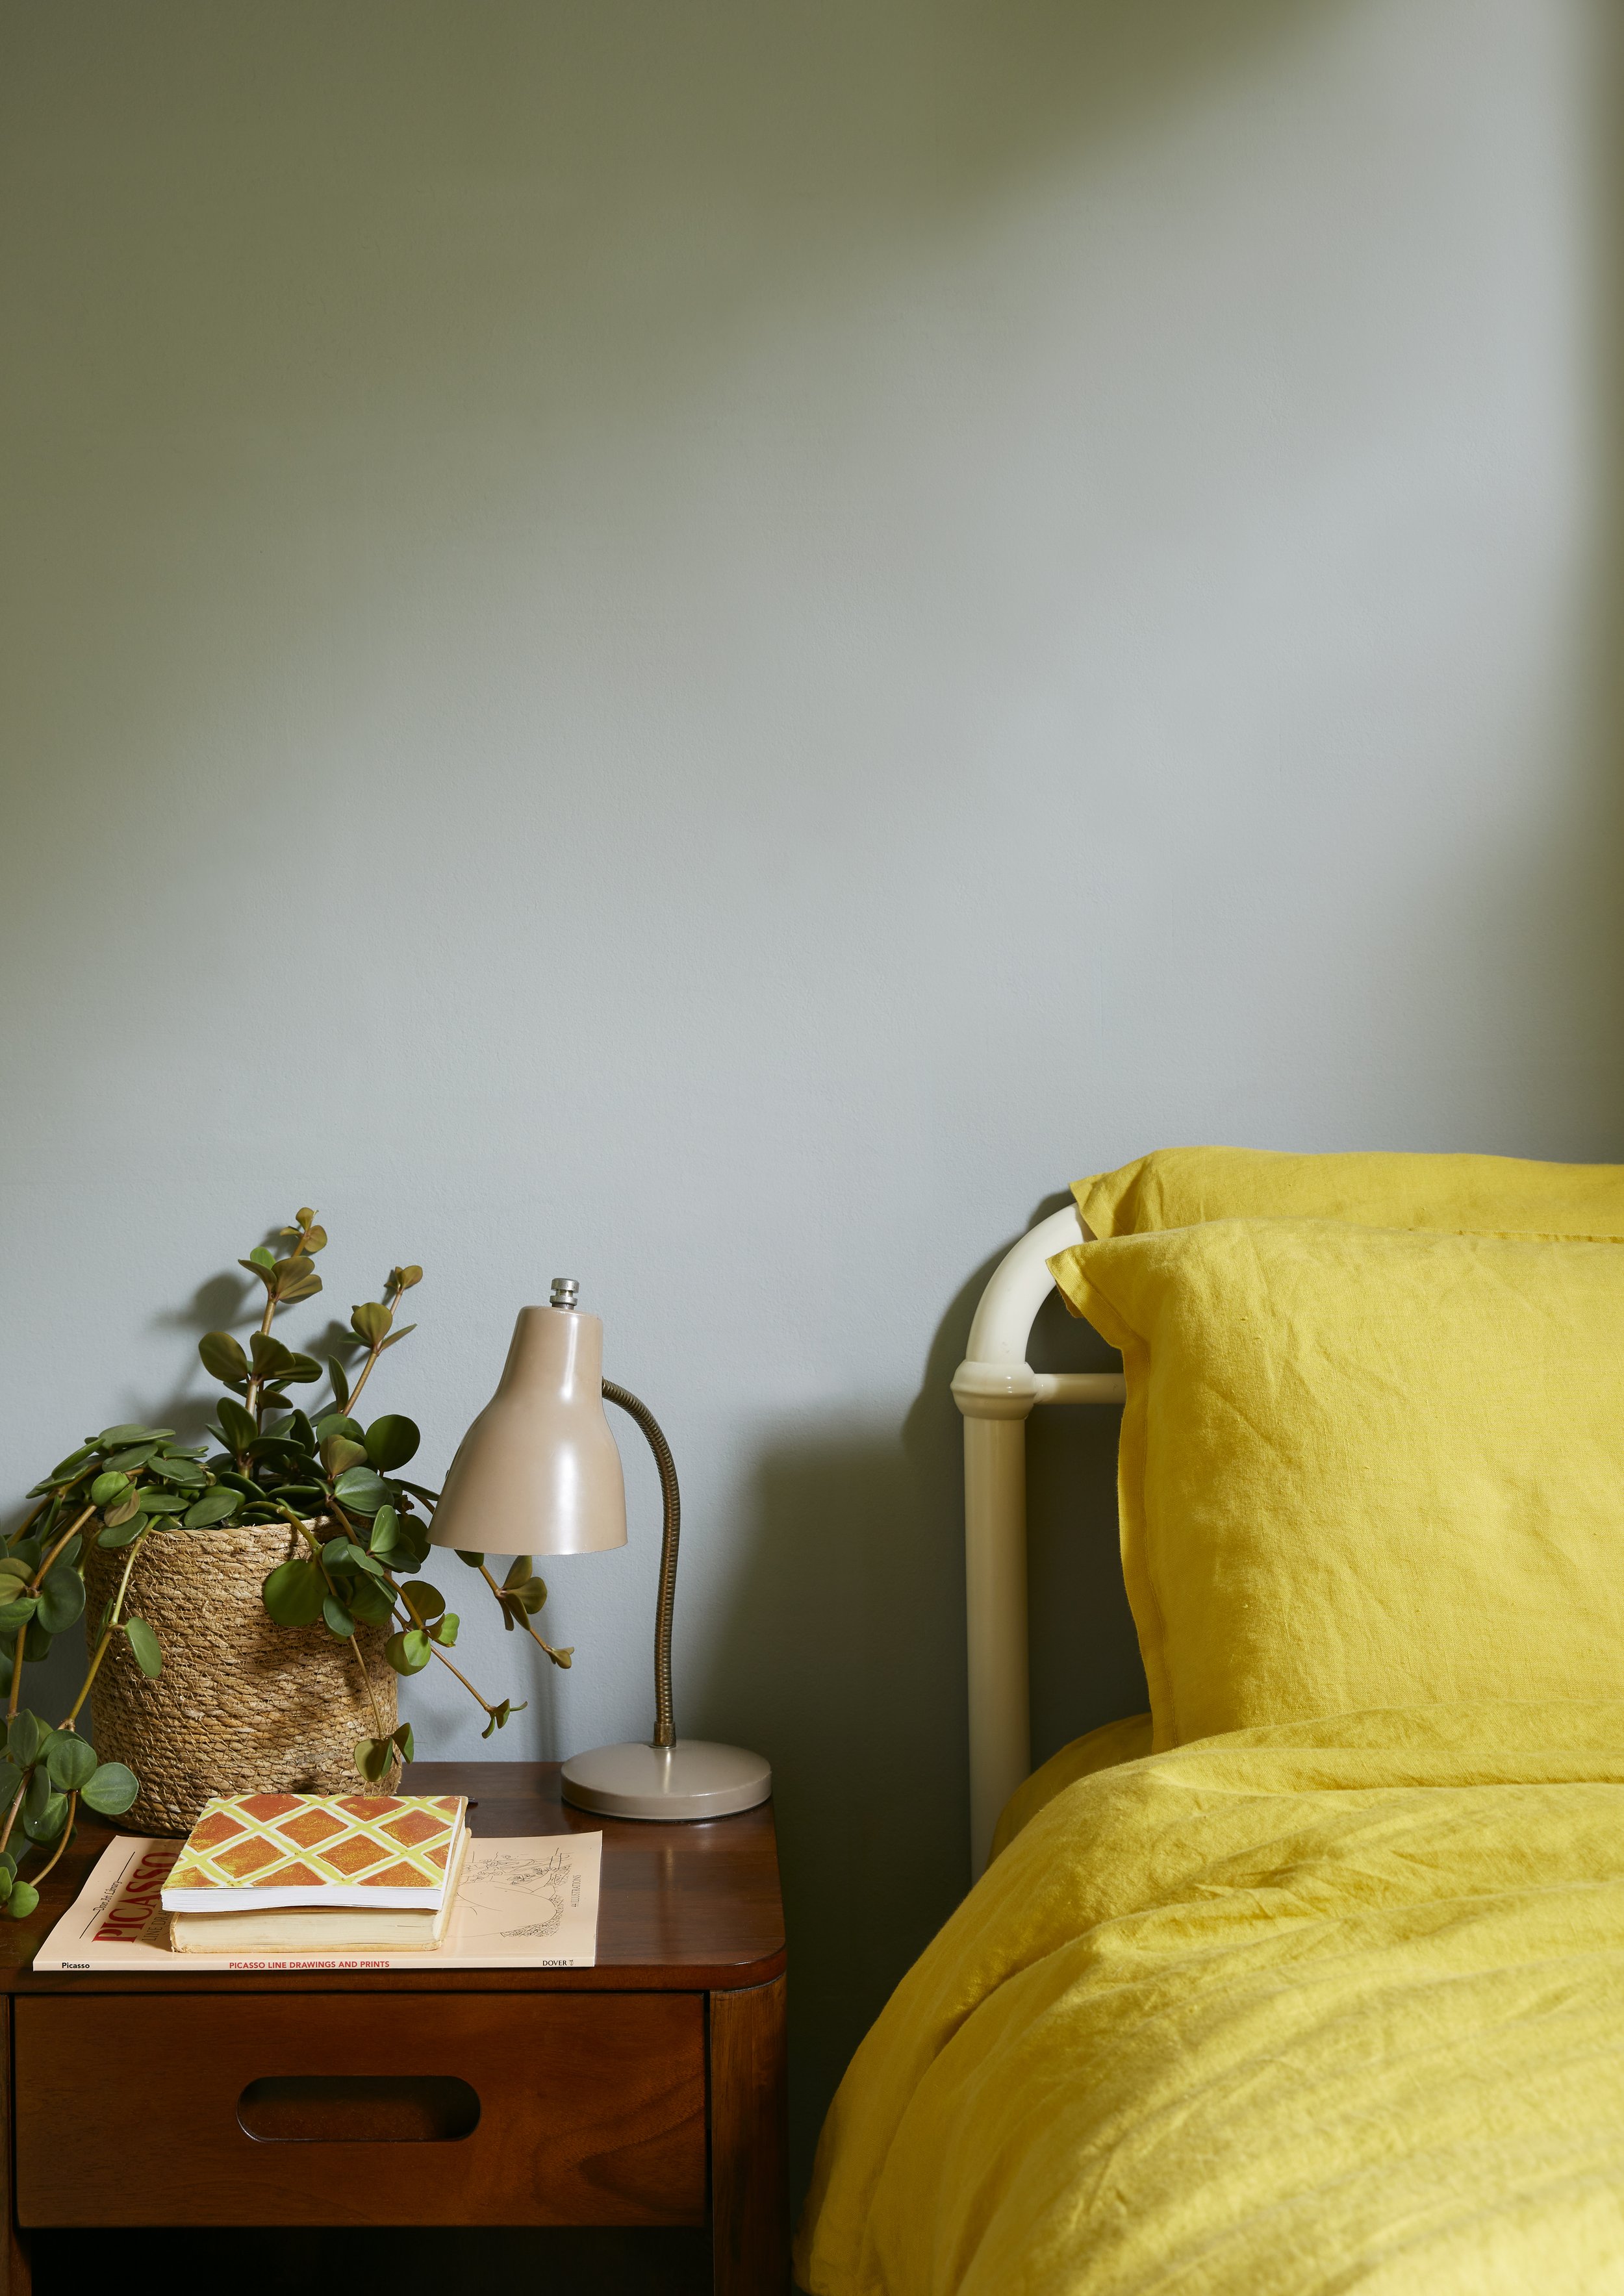 Grassy_Portrait_HR_Bedroom_Yellow Bed_Plants.jpg